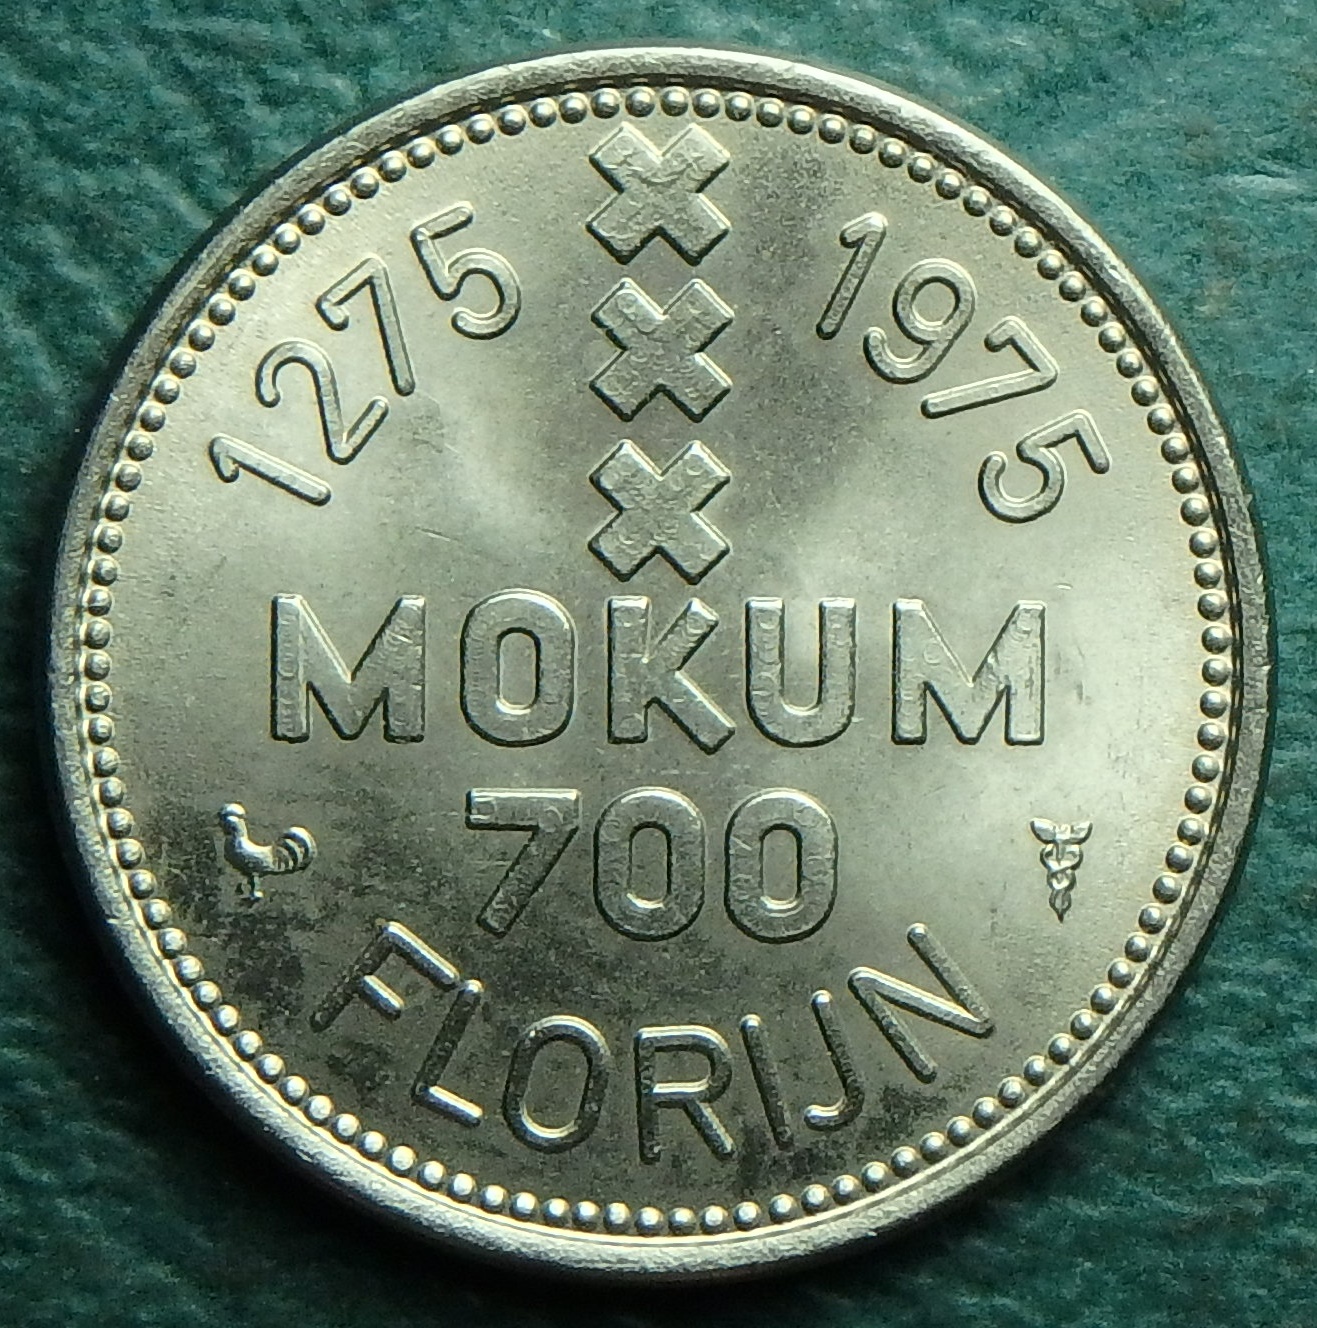 1975 NL 1 f rev token.JPG